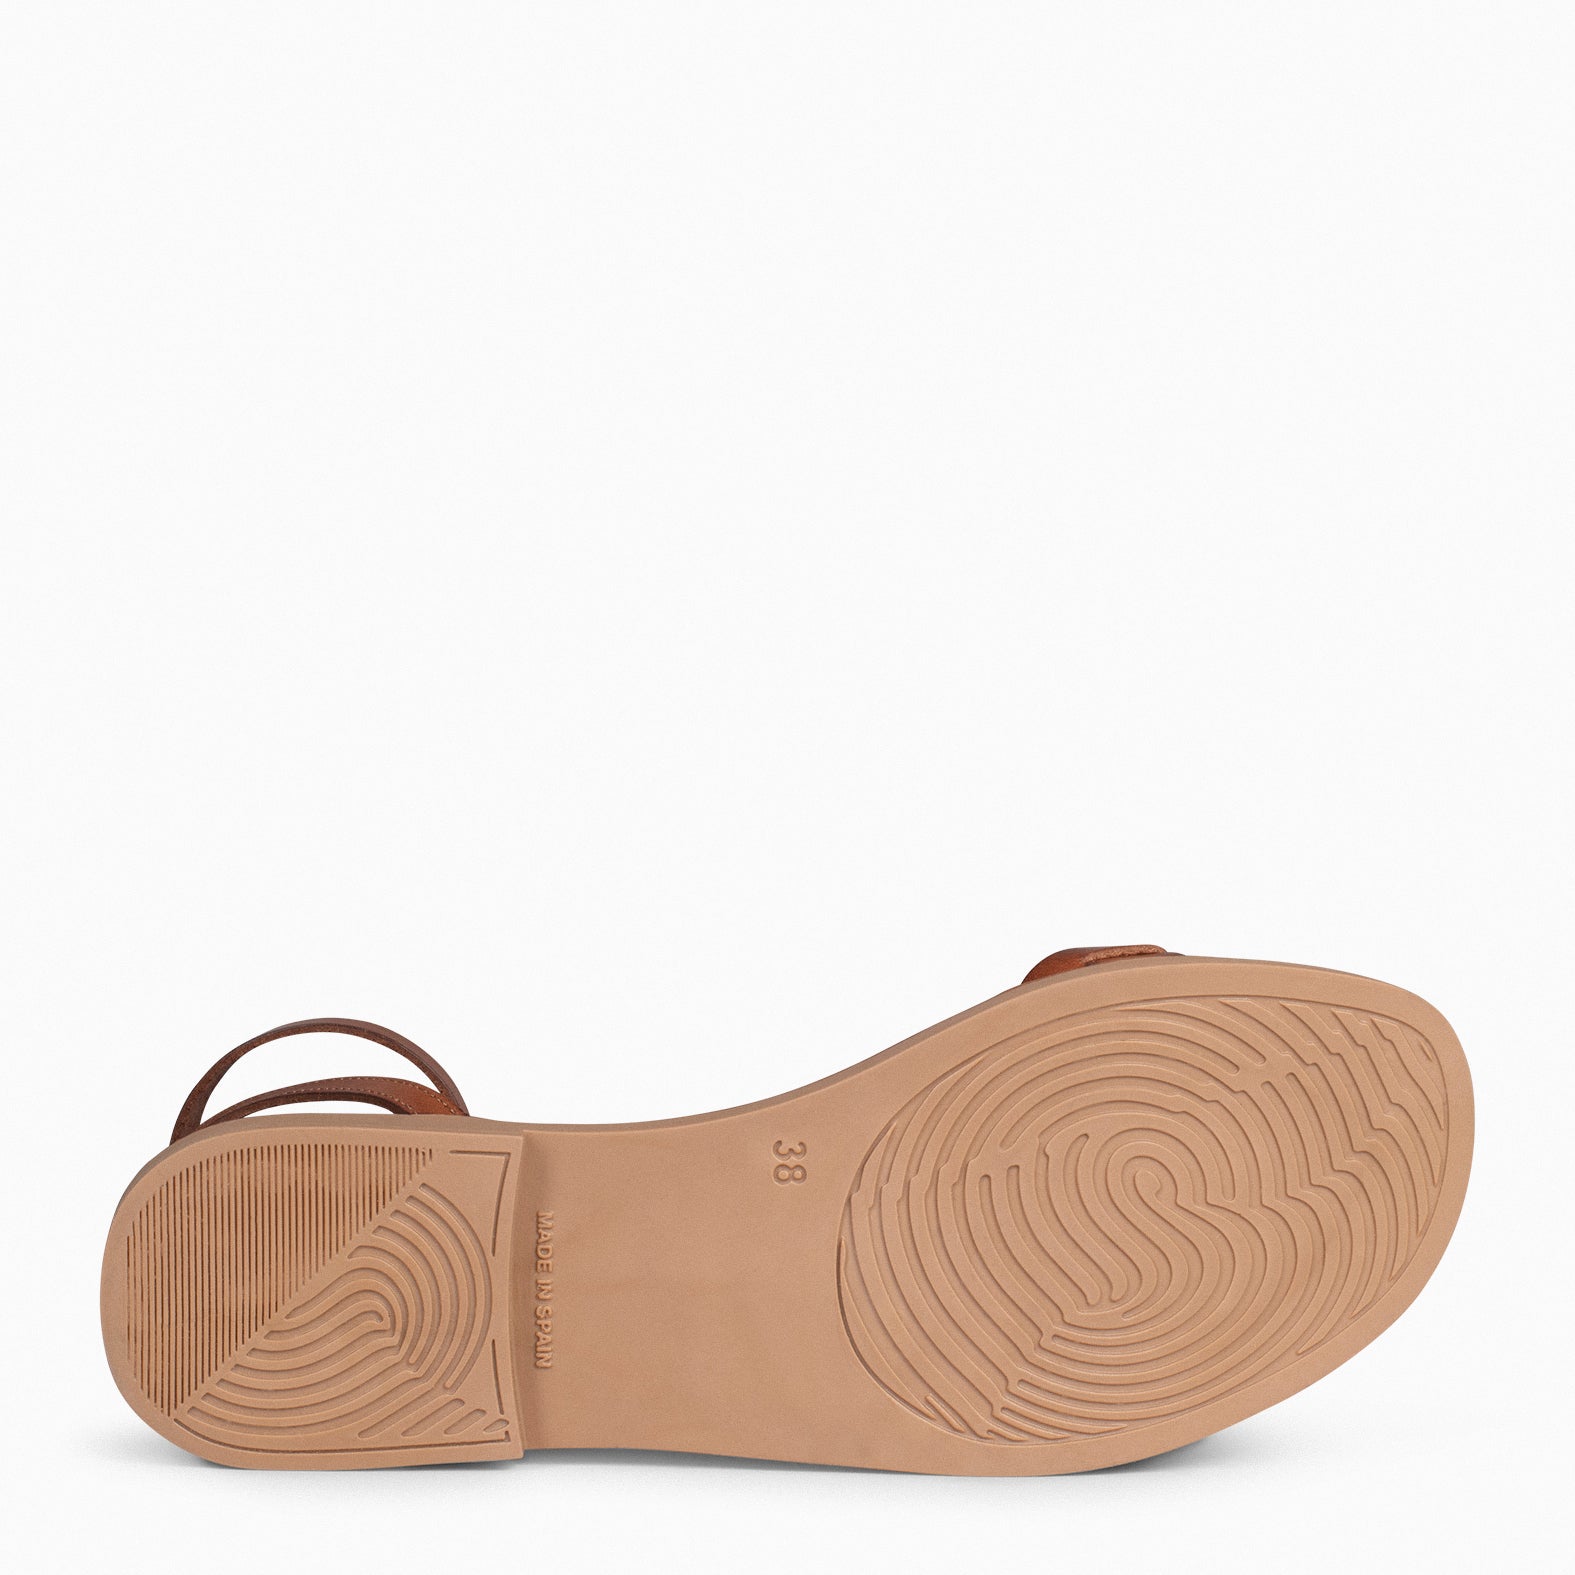 ARECA - CAMEL Women's Flat Sandals